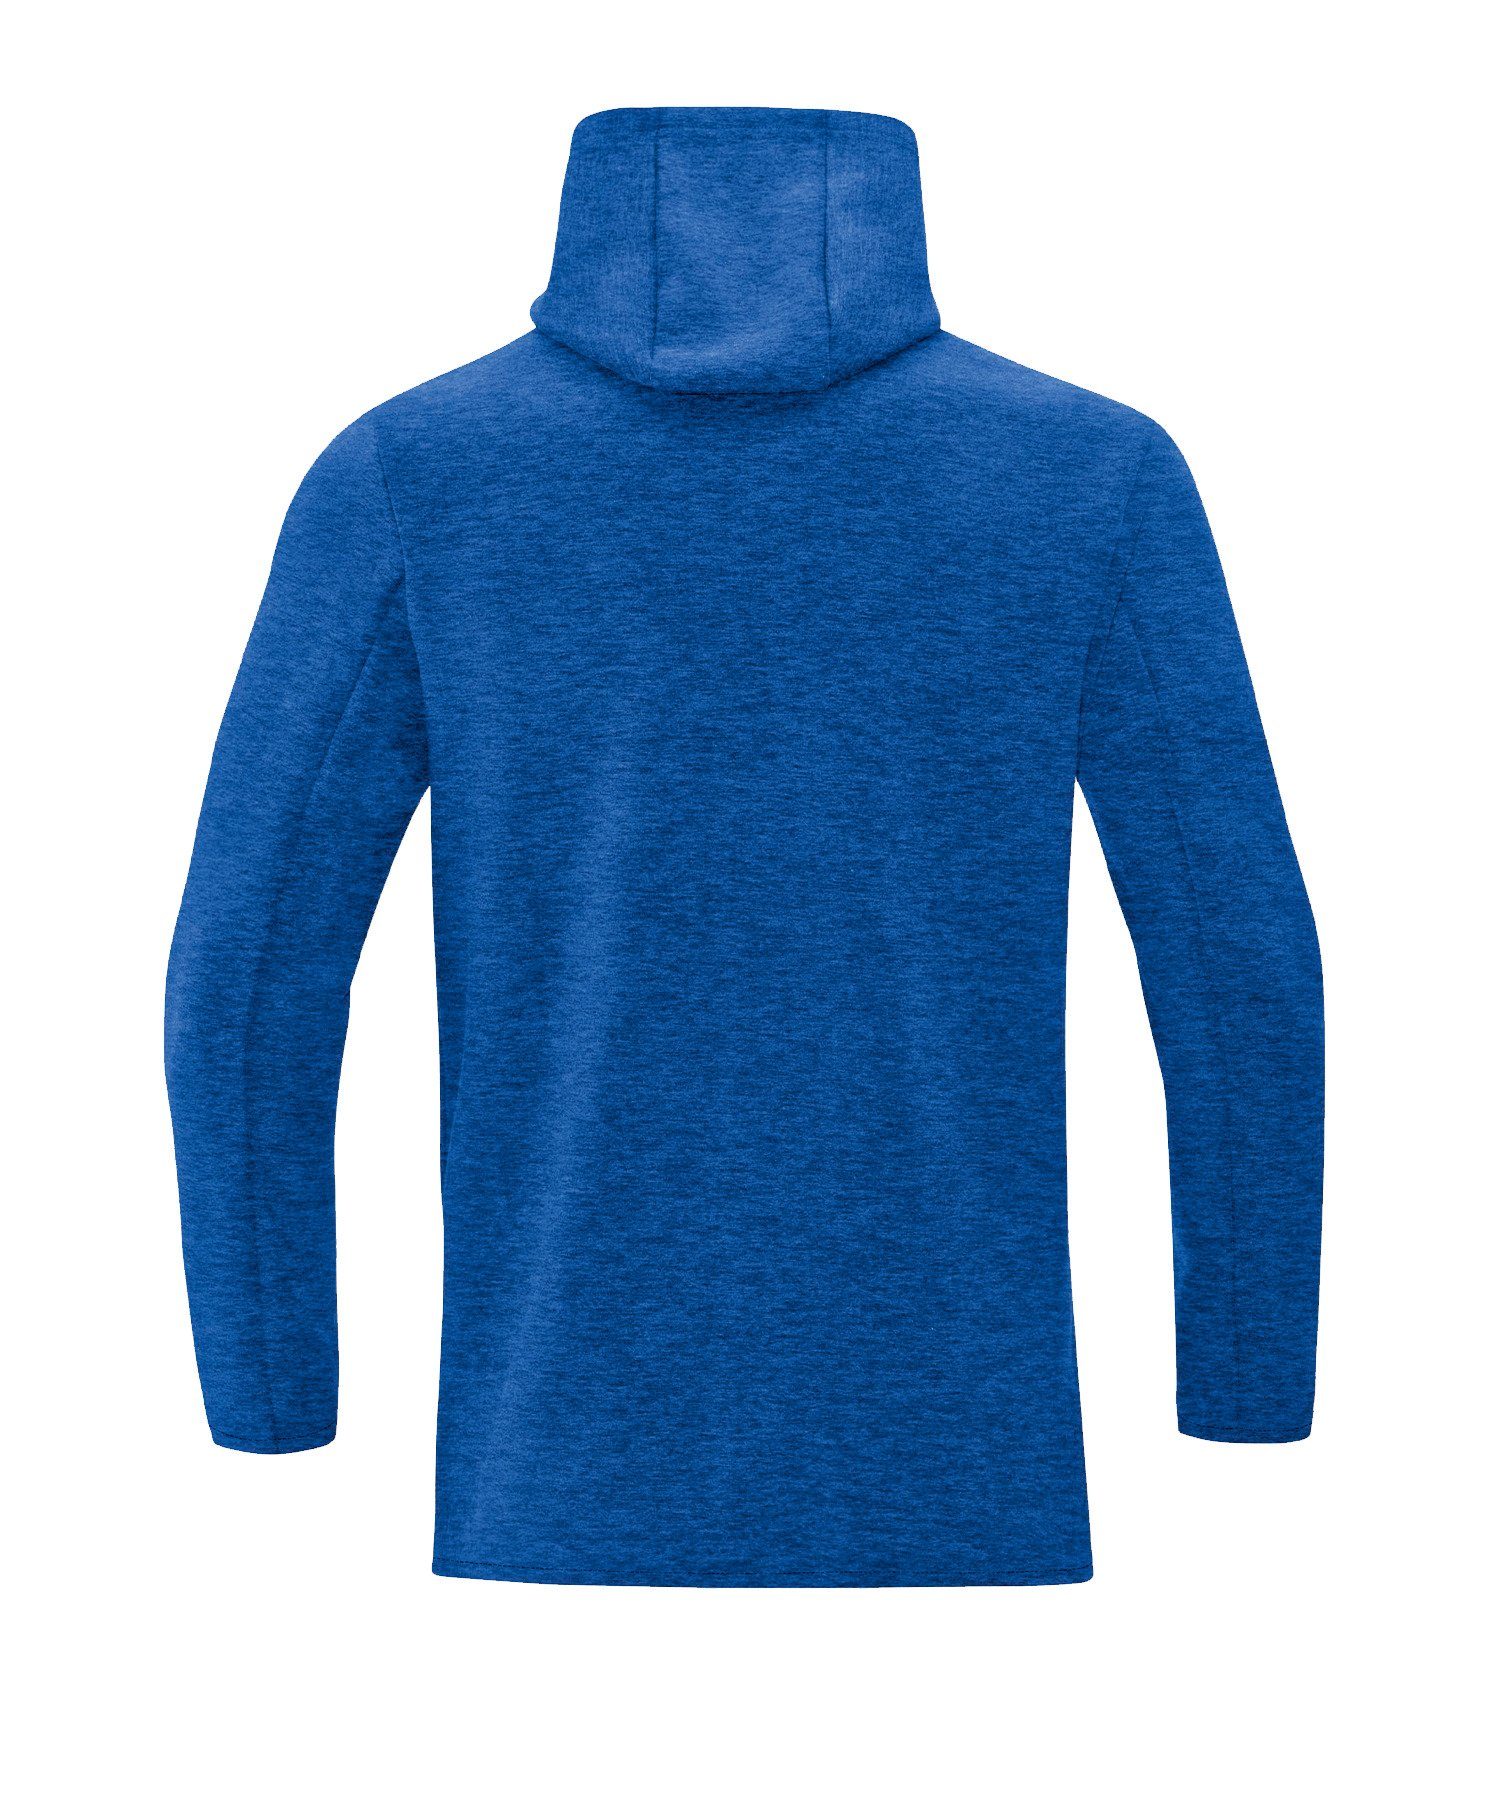 Jako Sweater Basic Damen Hoody Premium blauschwarz